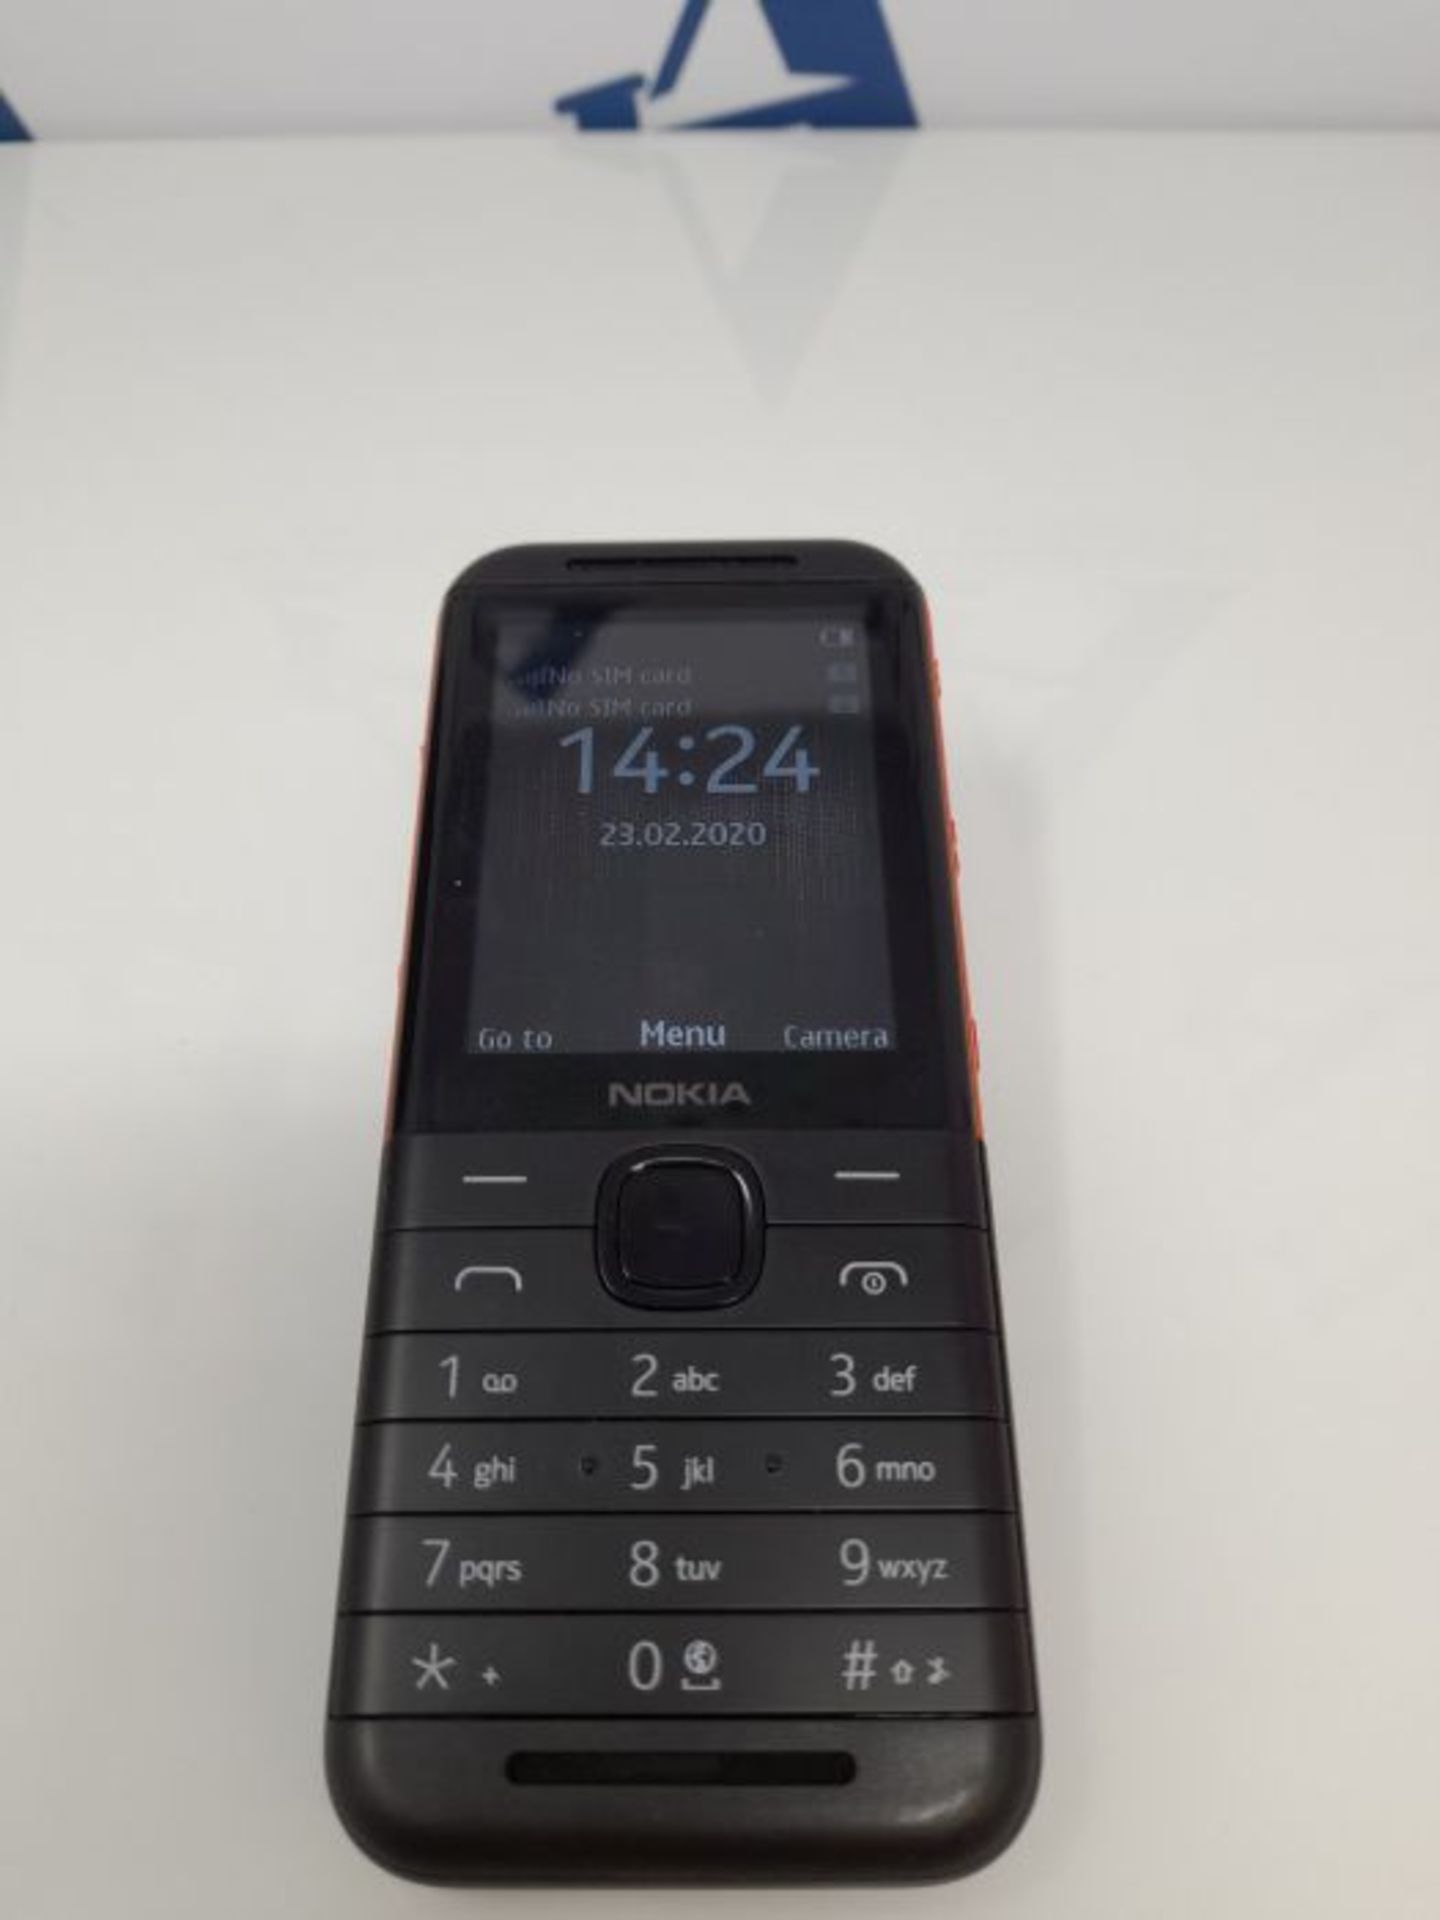 Nokia 5310 2.4 Inch 8 MB UK SIM-Free 2G Feature Phone (Dual Sim) - Black/Red - Image 2 of 3